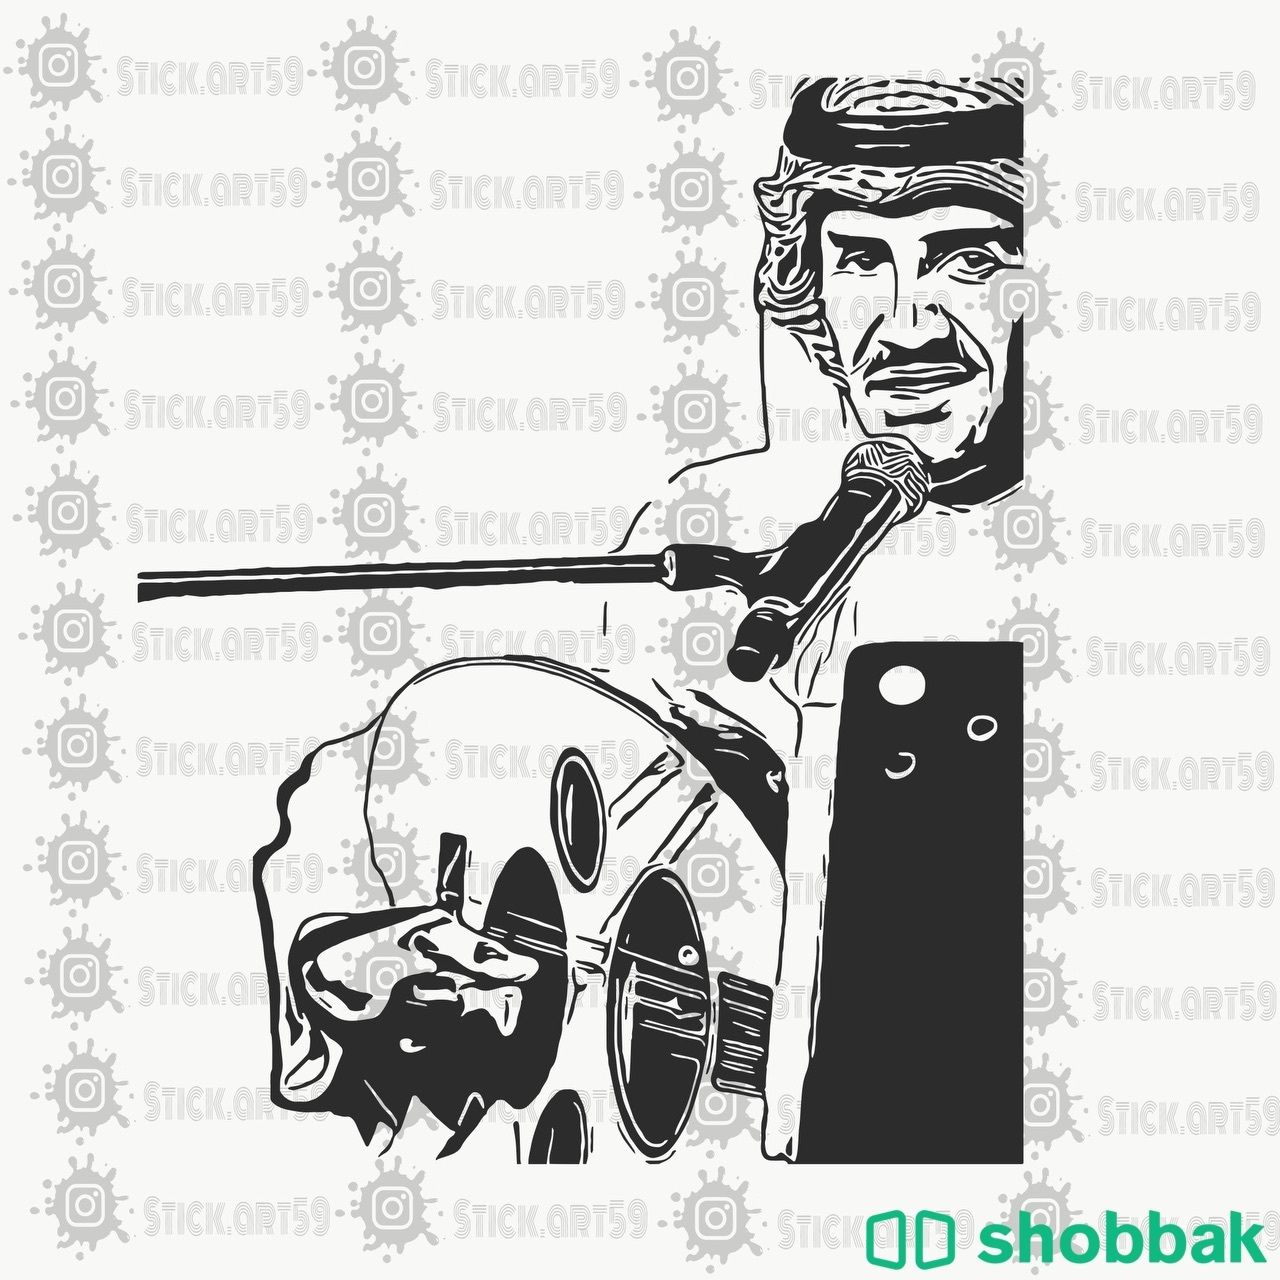 استكرات جدارية لاي تصميم انت تحبه Shobbak Saudi Arabia